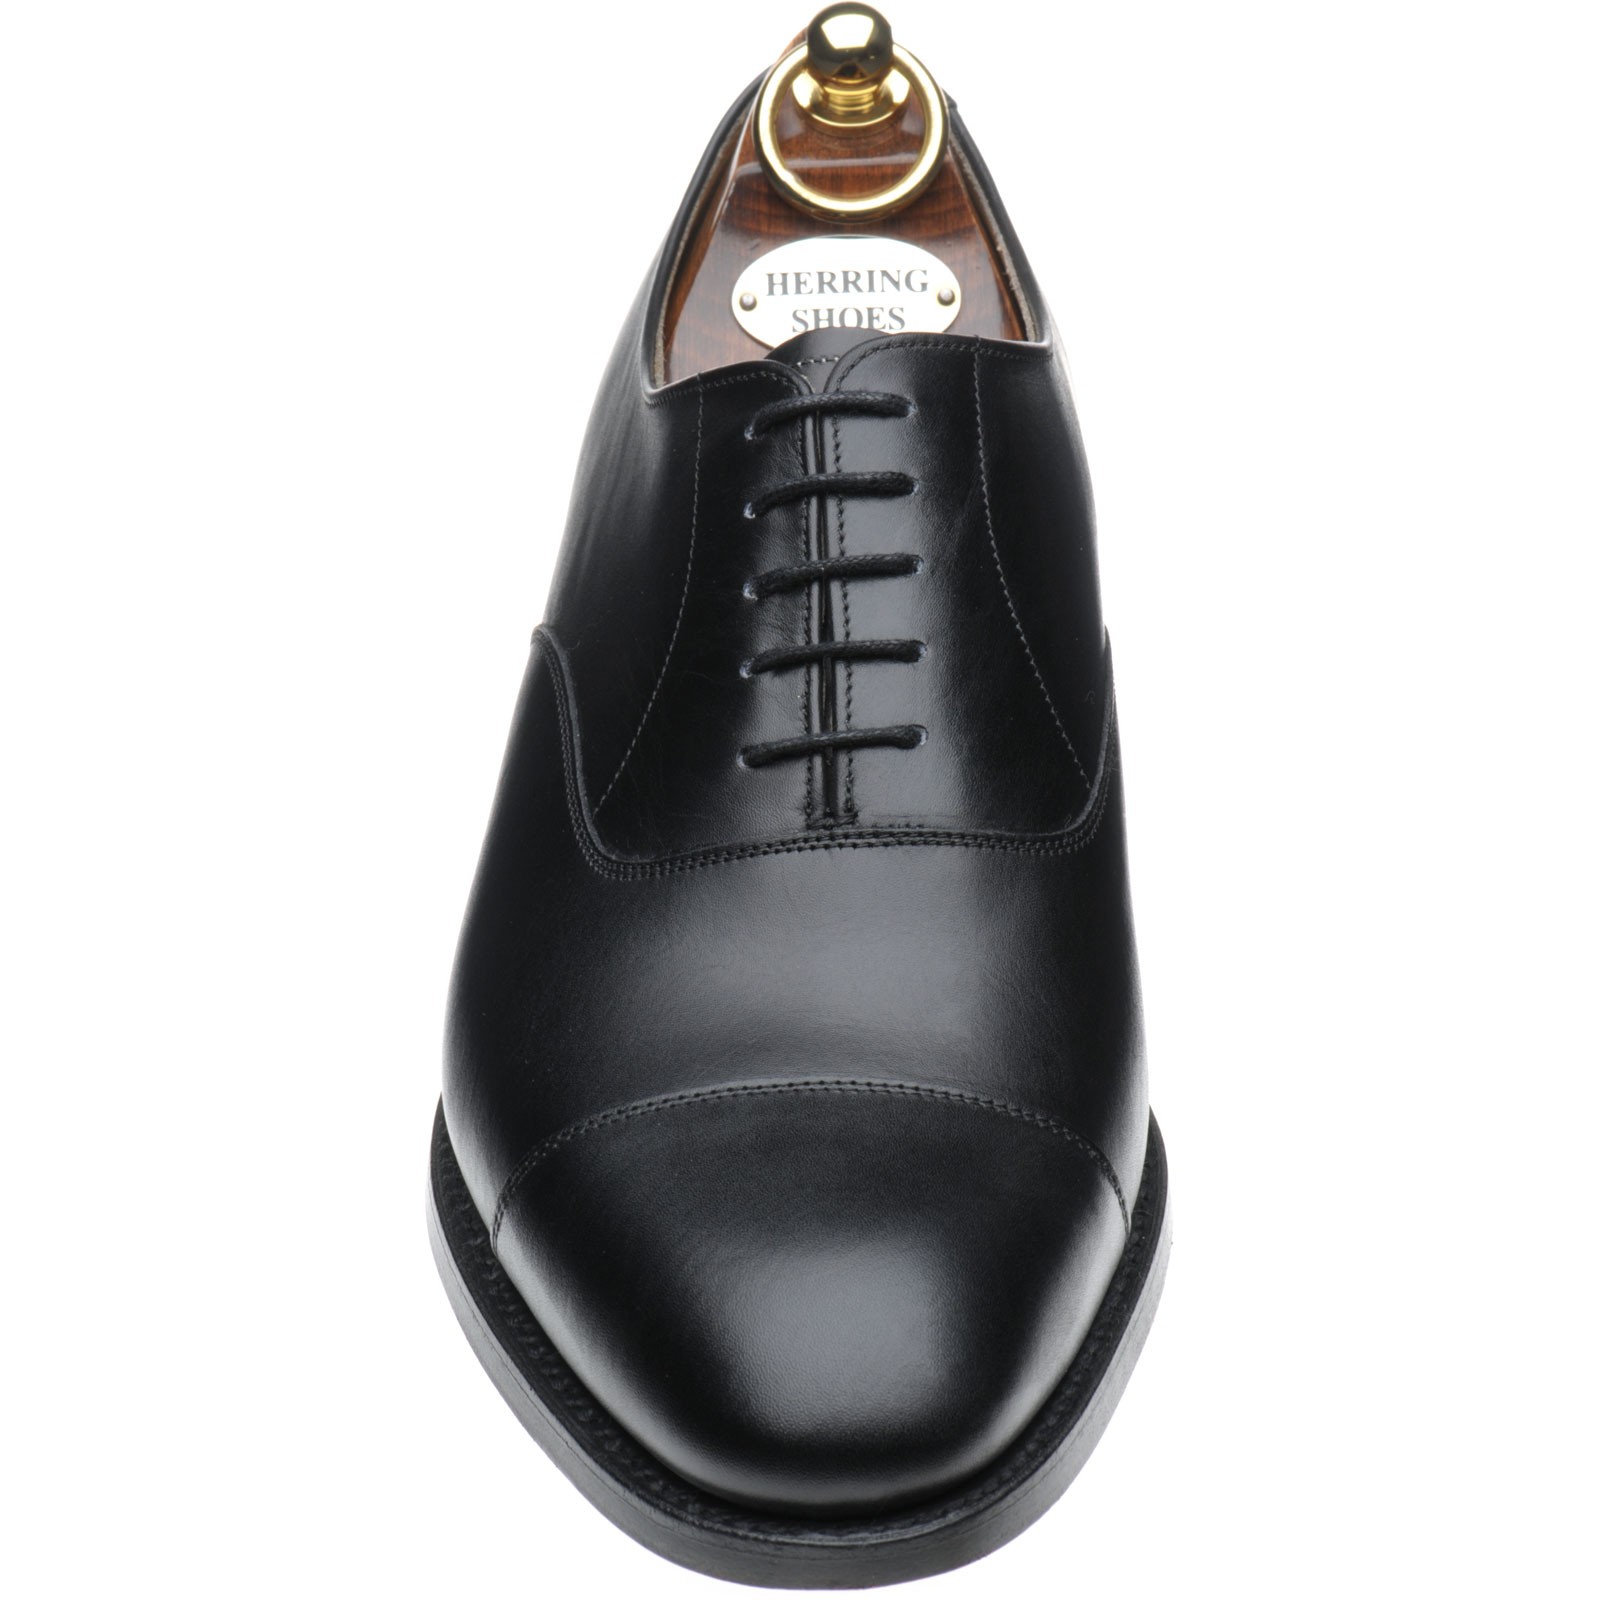 Herring shoes | Herring Classic | Mayfair Oxfords in Black Calf at ...